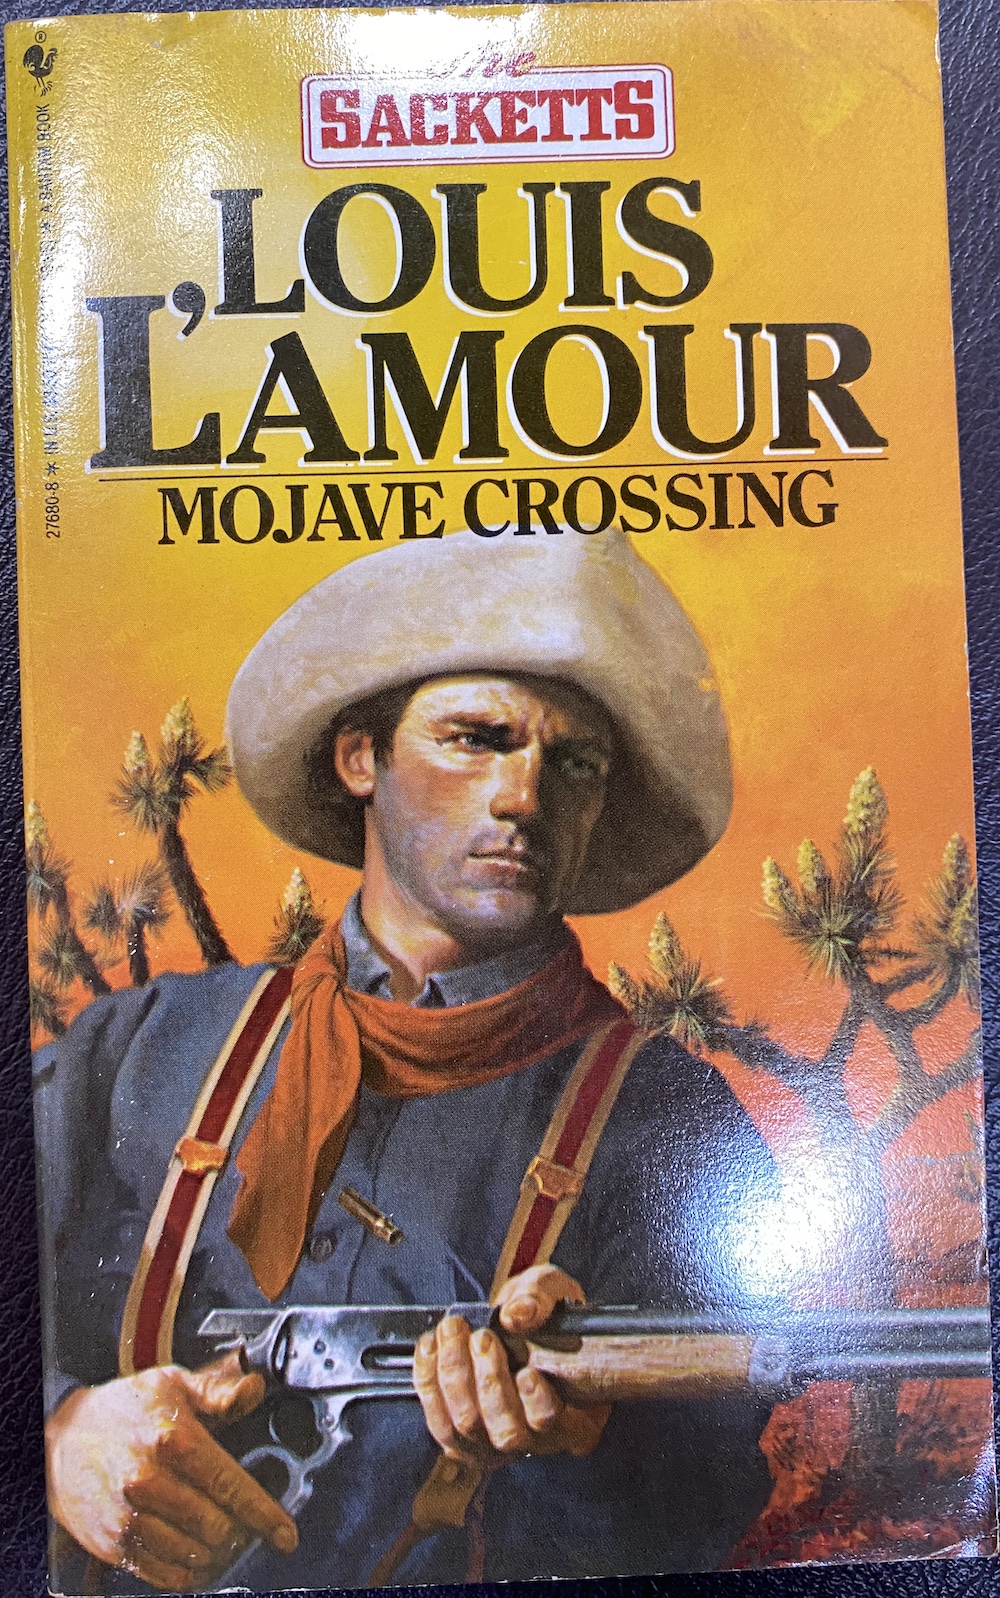 Mojave Crossing [Book]